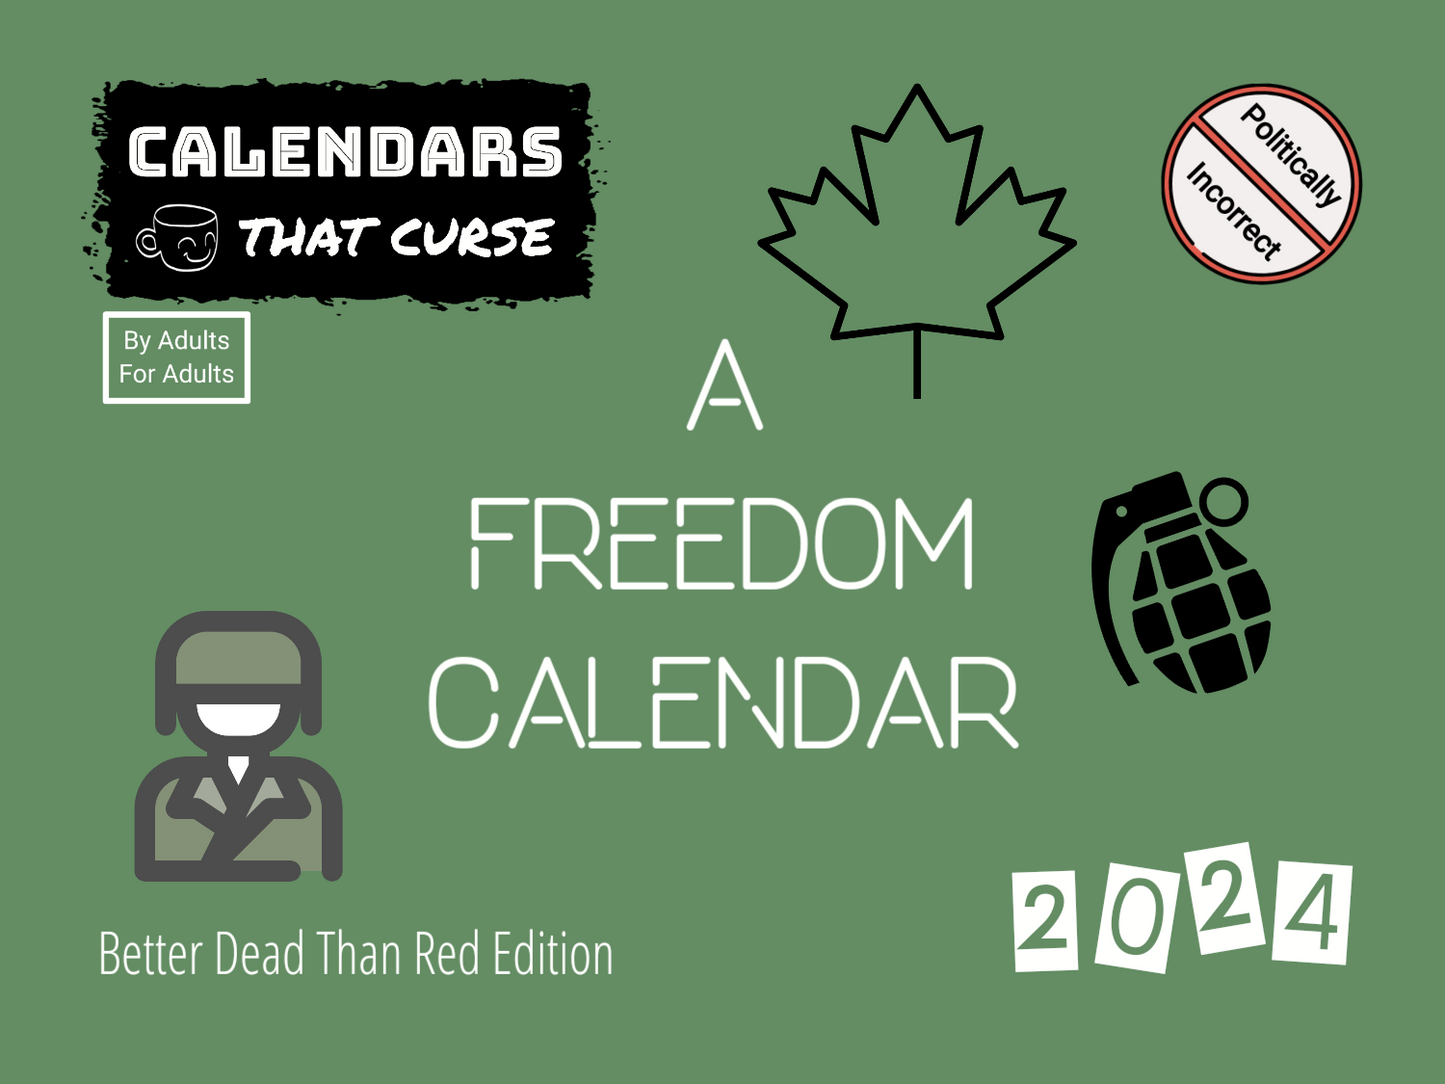 A Freedom Calendar 2024